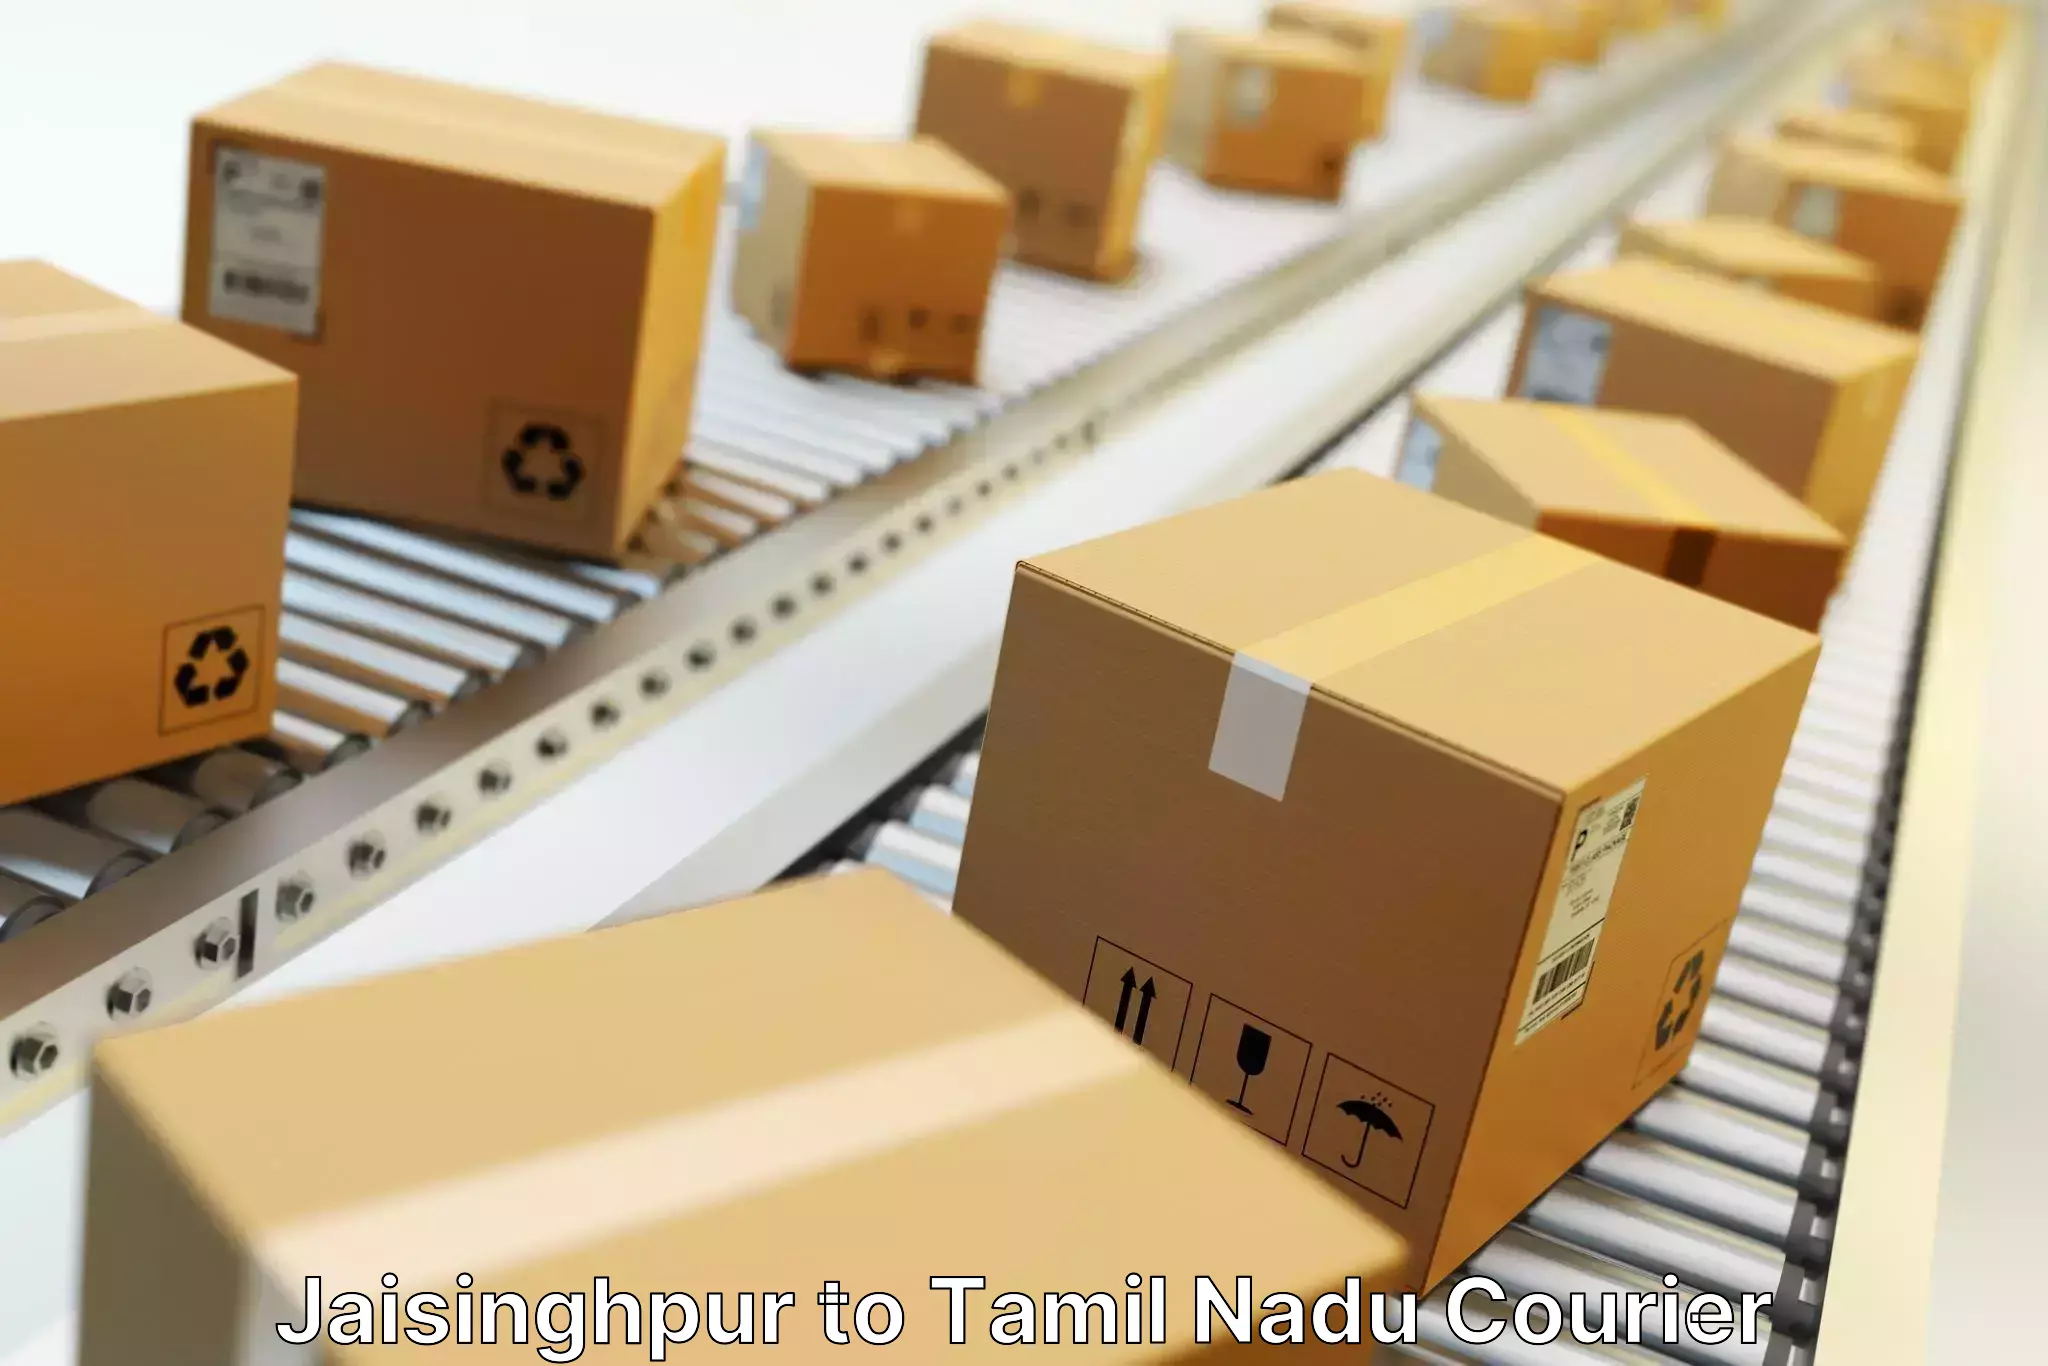 Same-day delivery options Jaisinghpur to Chennai Port